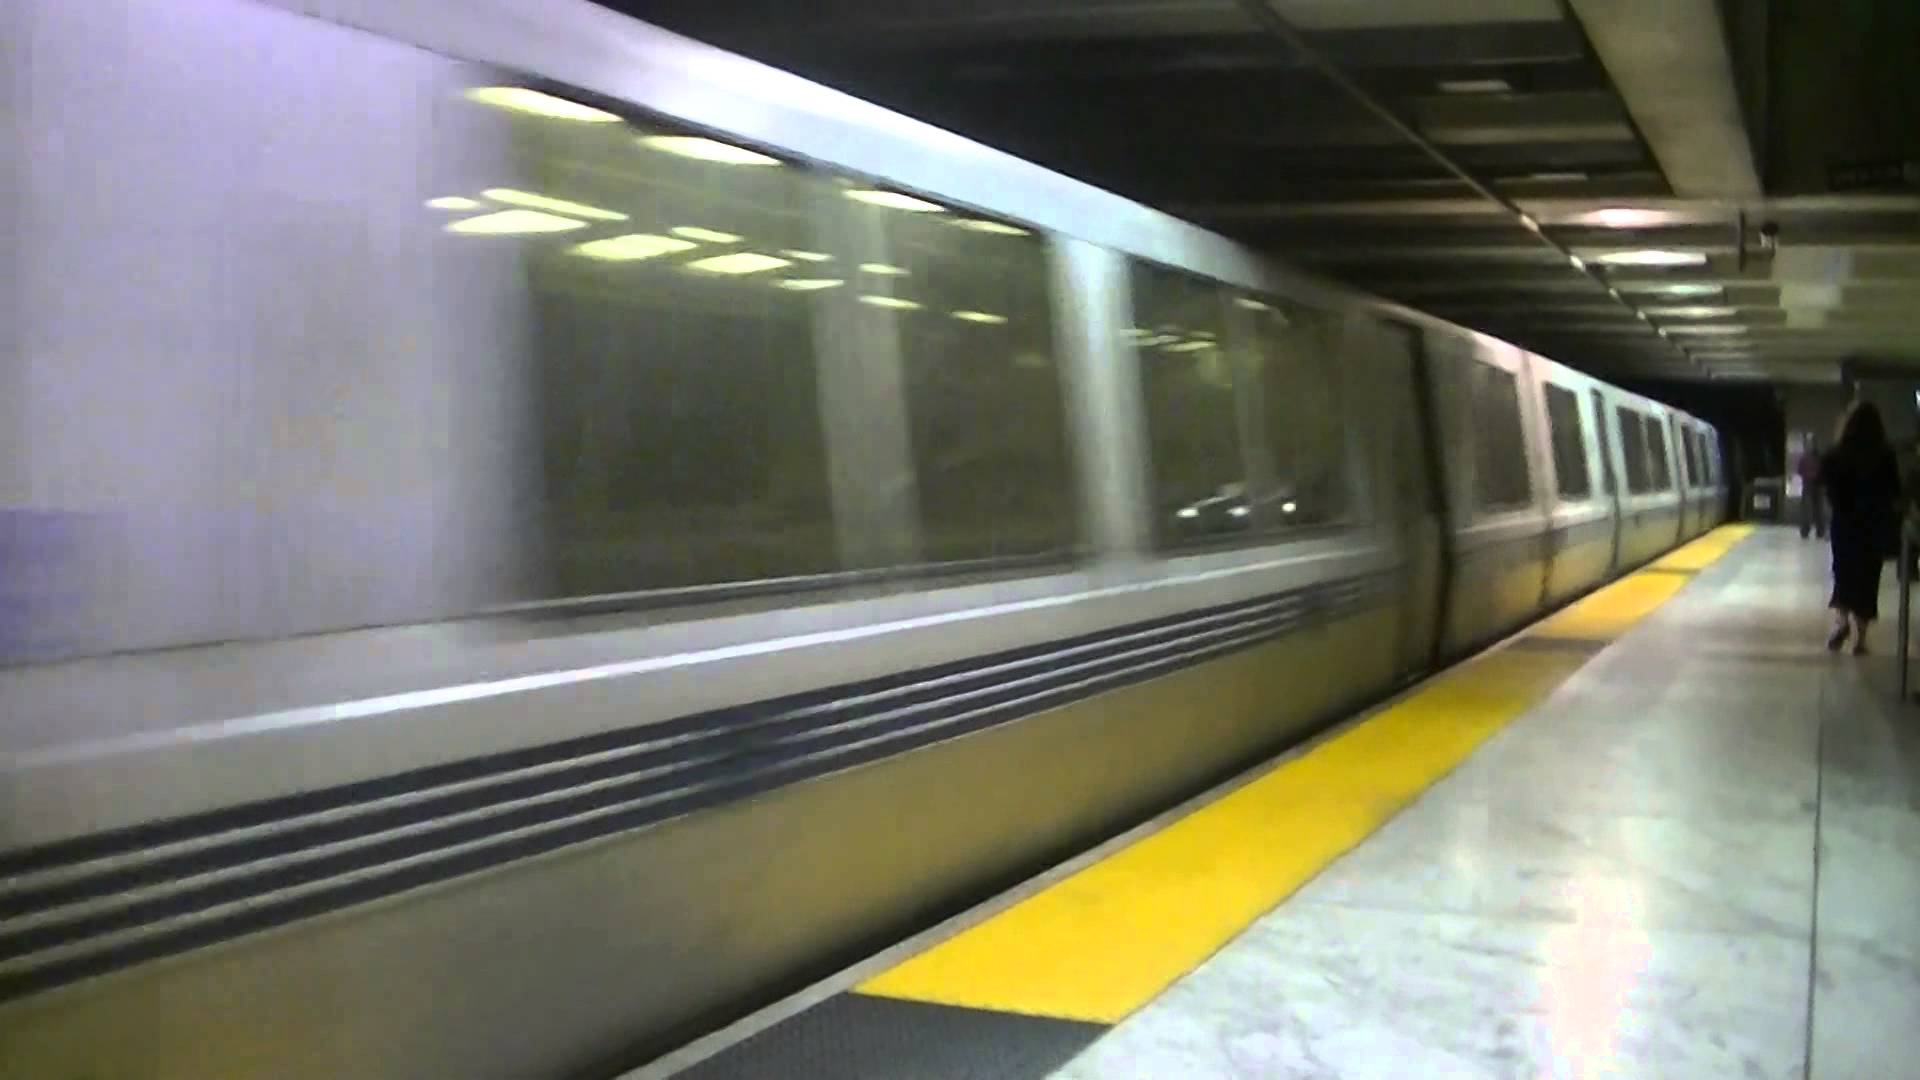 train won't stop bart train passing embarcadero station - YouTube